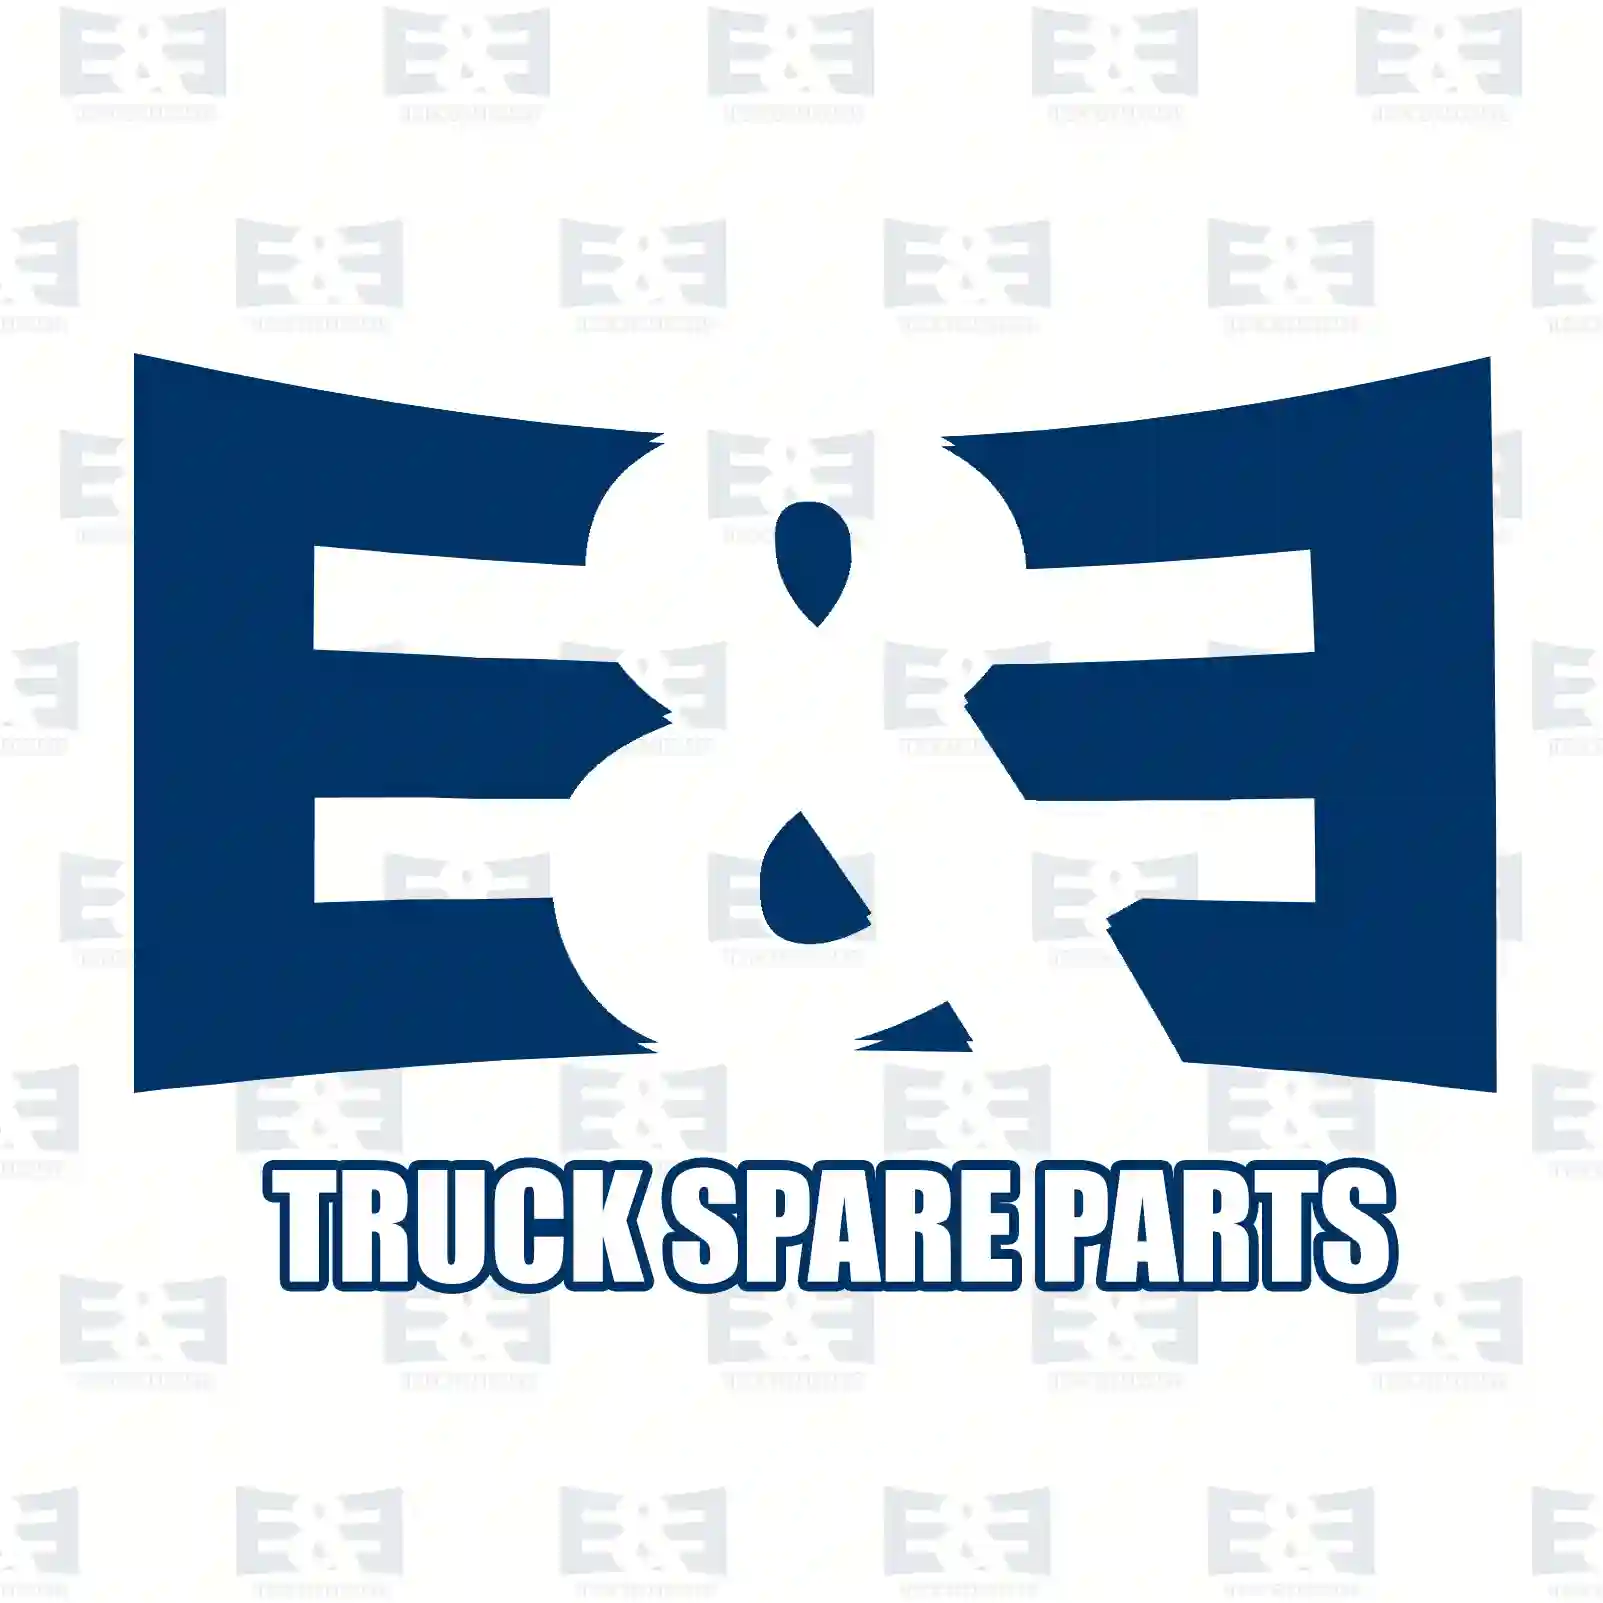 Air Tank Air tank, EE No 2E2296969 ,  oem no:81514010244, 81514010263, 81514016031, , E&E Truck Spare Parts | Truck Spare Parts, Auotomotive Spare Parts